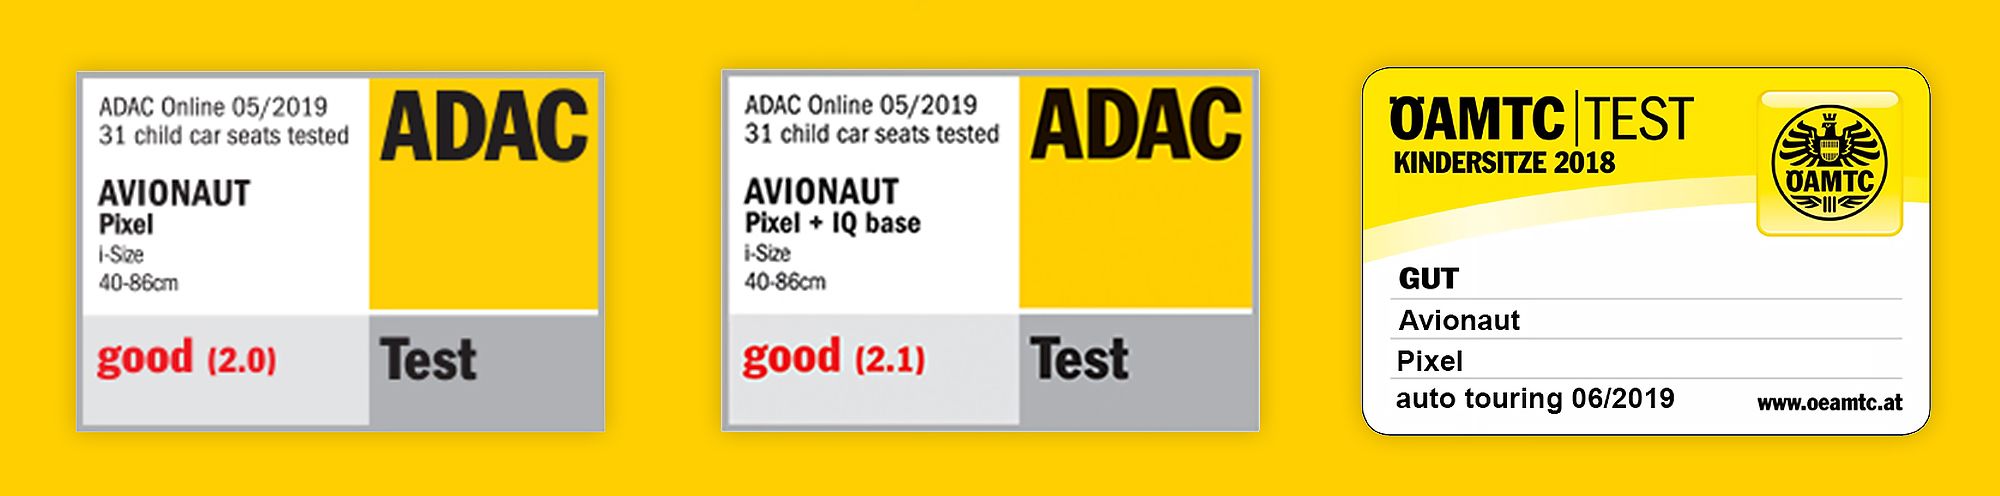 Pixel IQ baza ADAC test OAMTC test